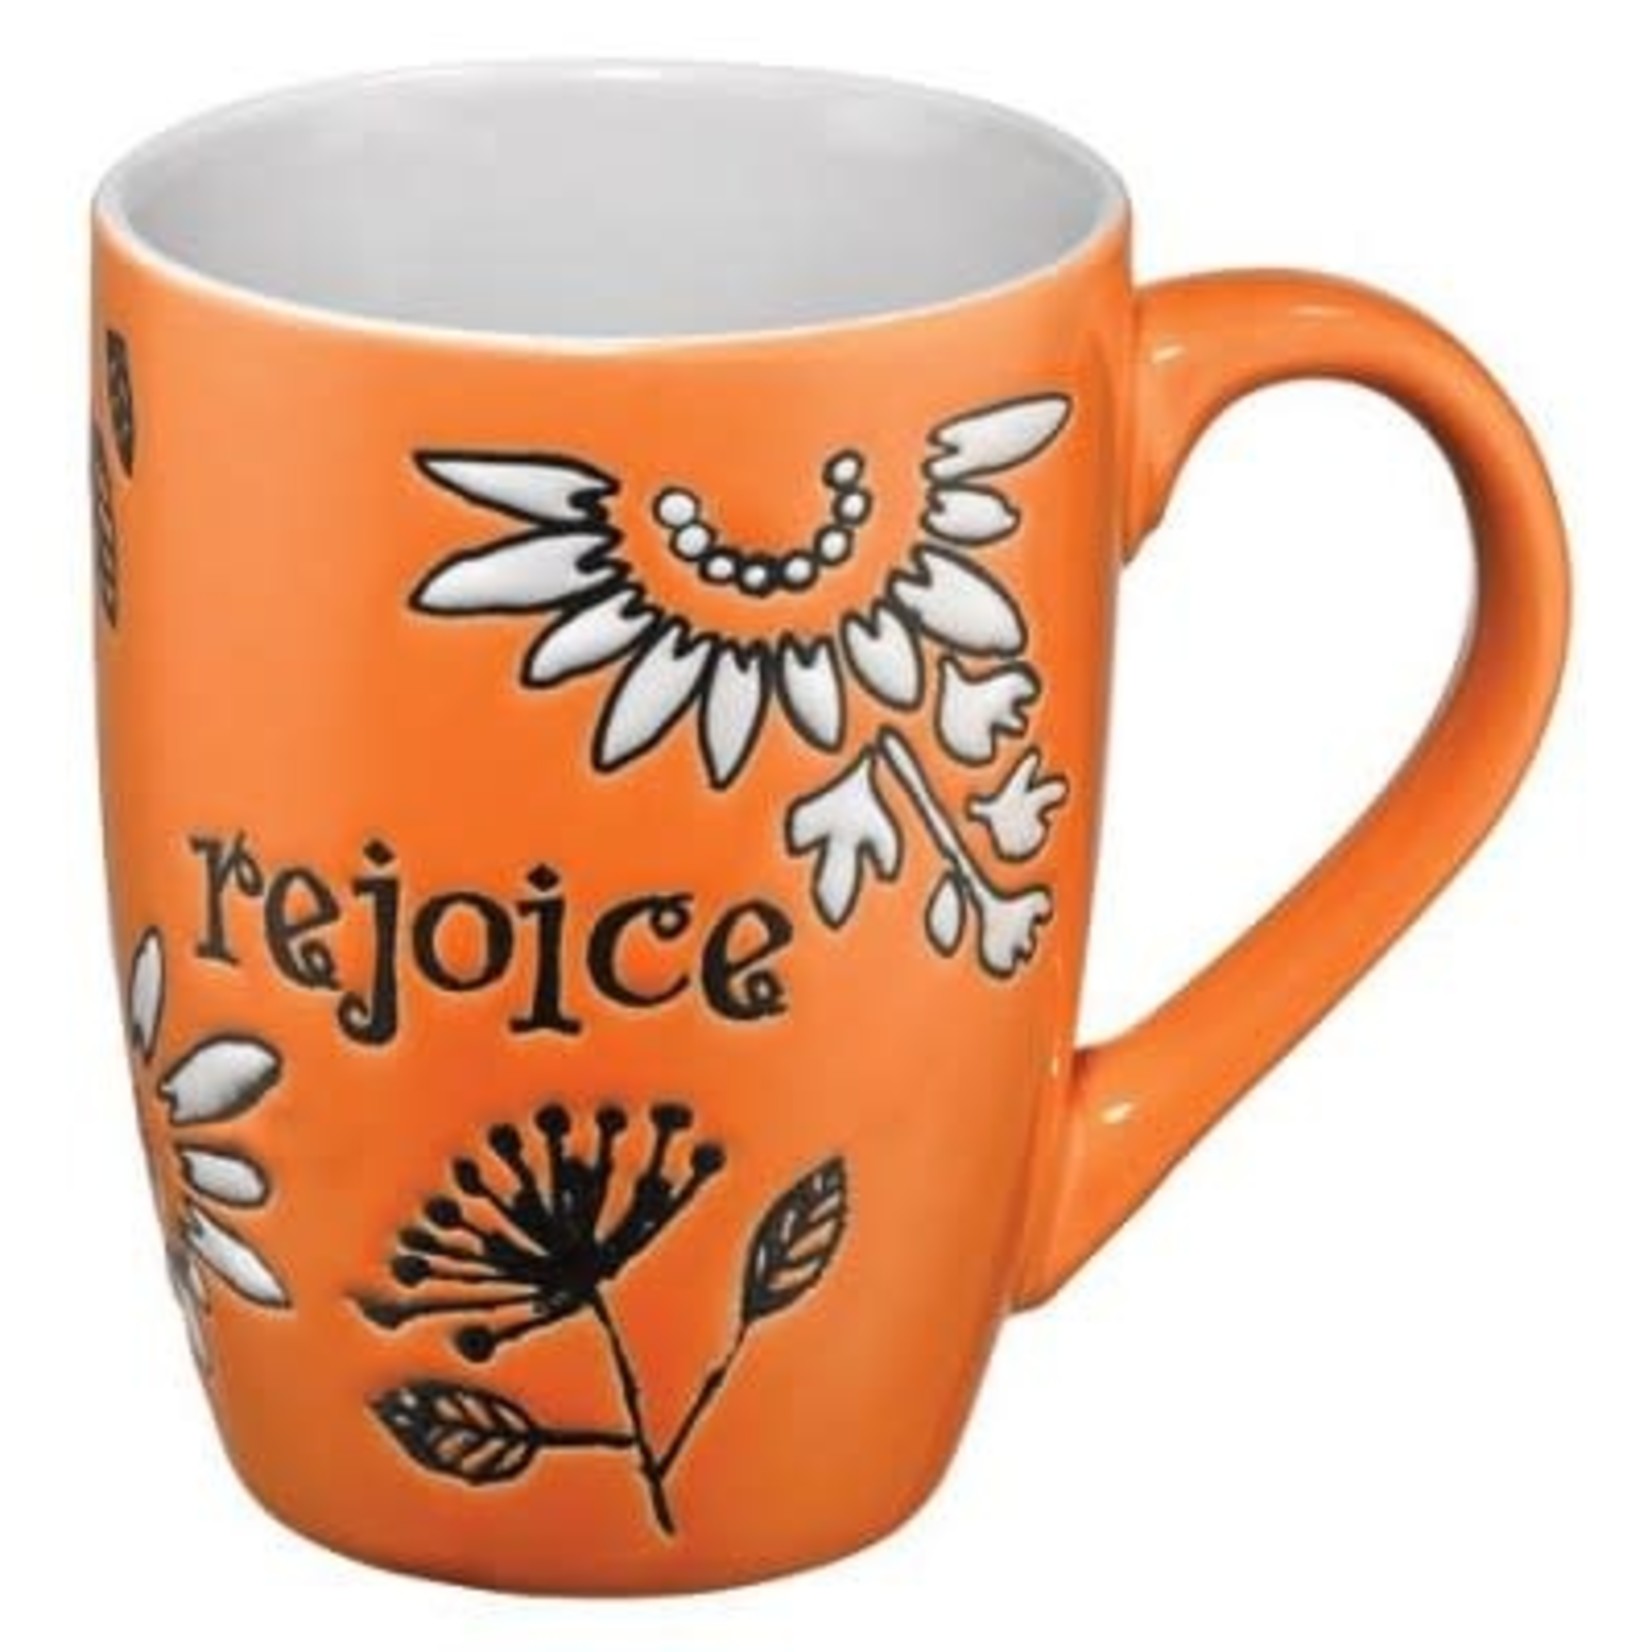 Christian Art Gifts Rejoice Mug - Orange - 12 ounces